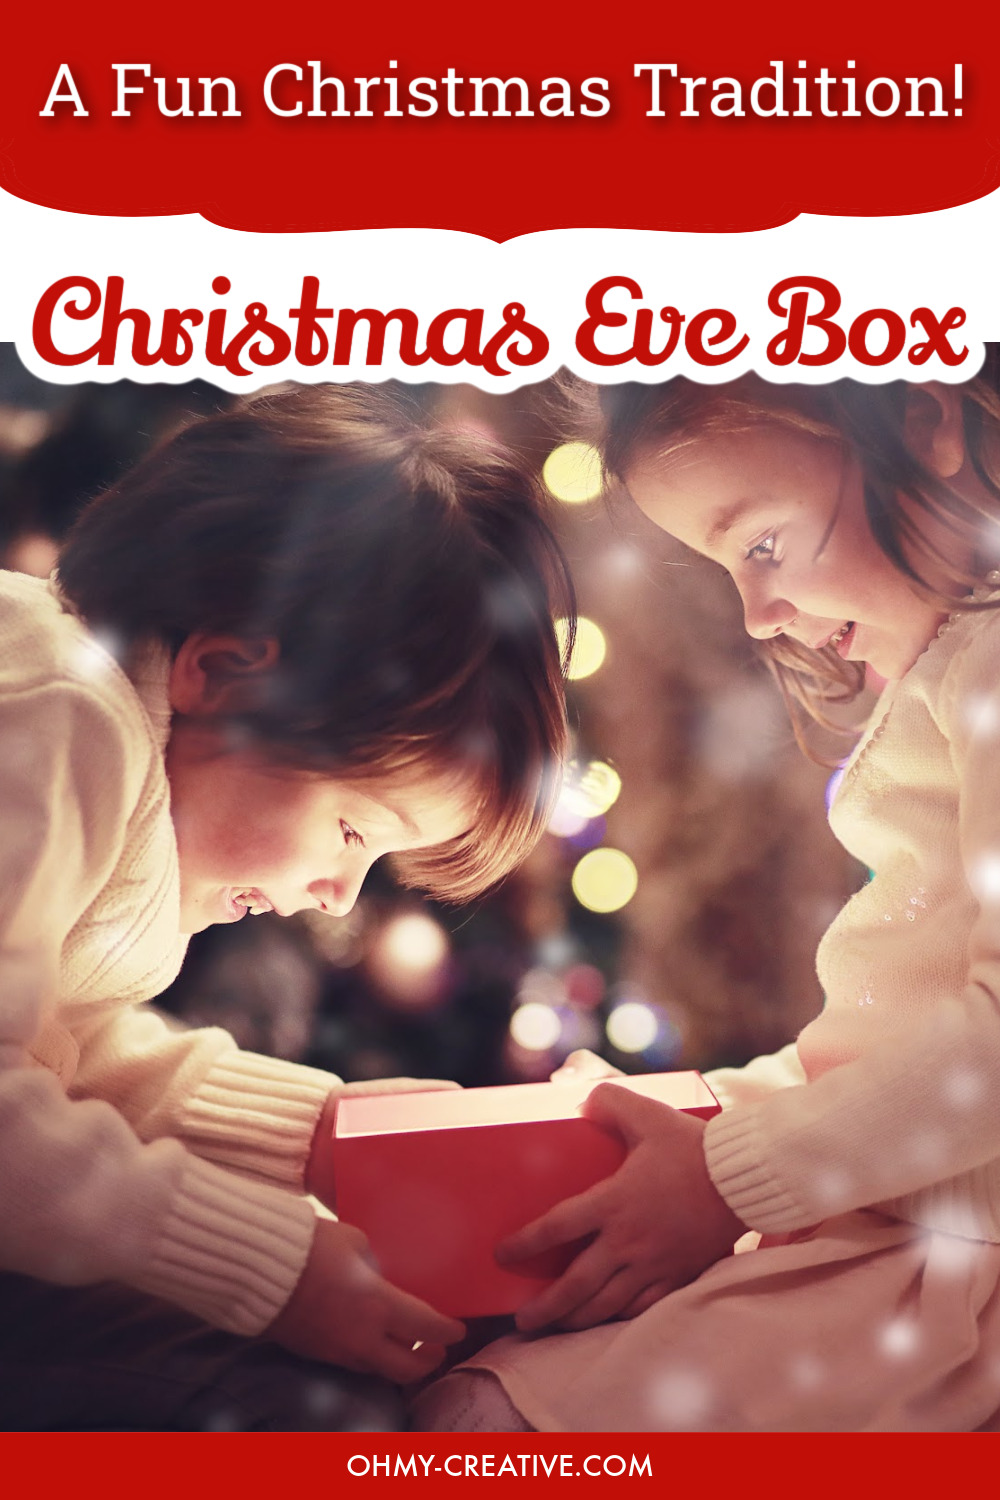 Christmas Eve Box Ideas: Everything You Need